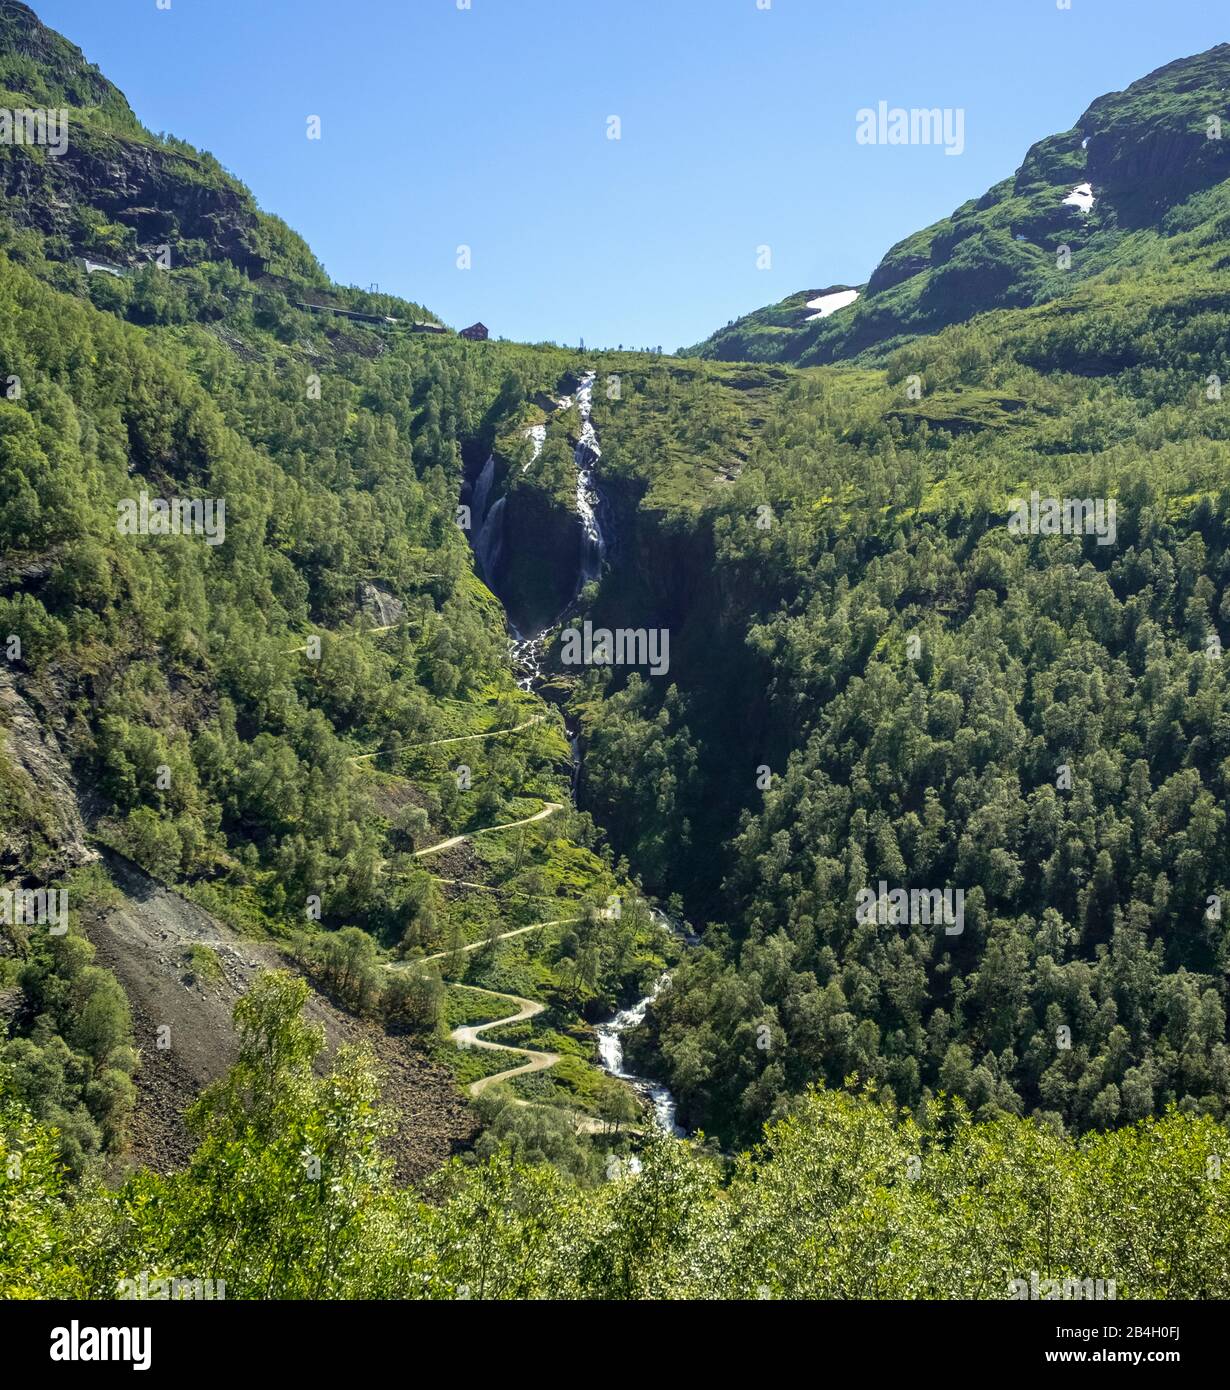 Kjosfossen waterfall, waterfall near Fureberget, mountain, forest, road, sky Flåm, Sogn og Fjordane, Norway, Scandinavia, Europe Stock Photo